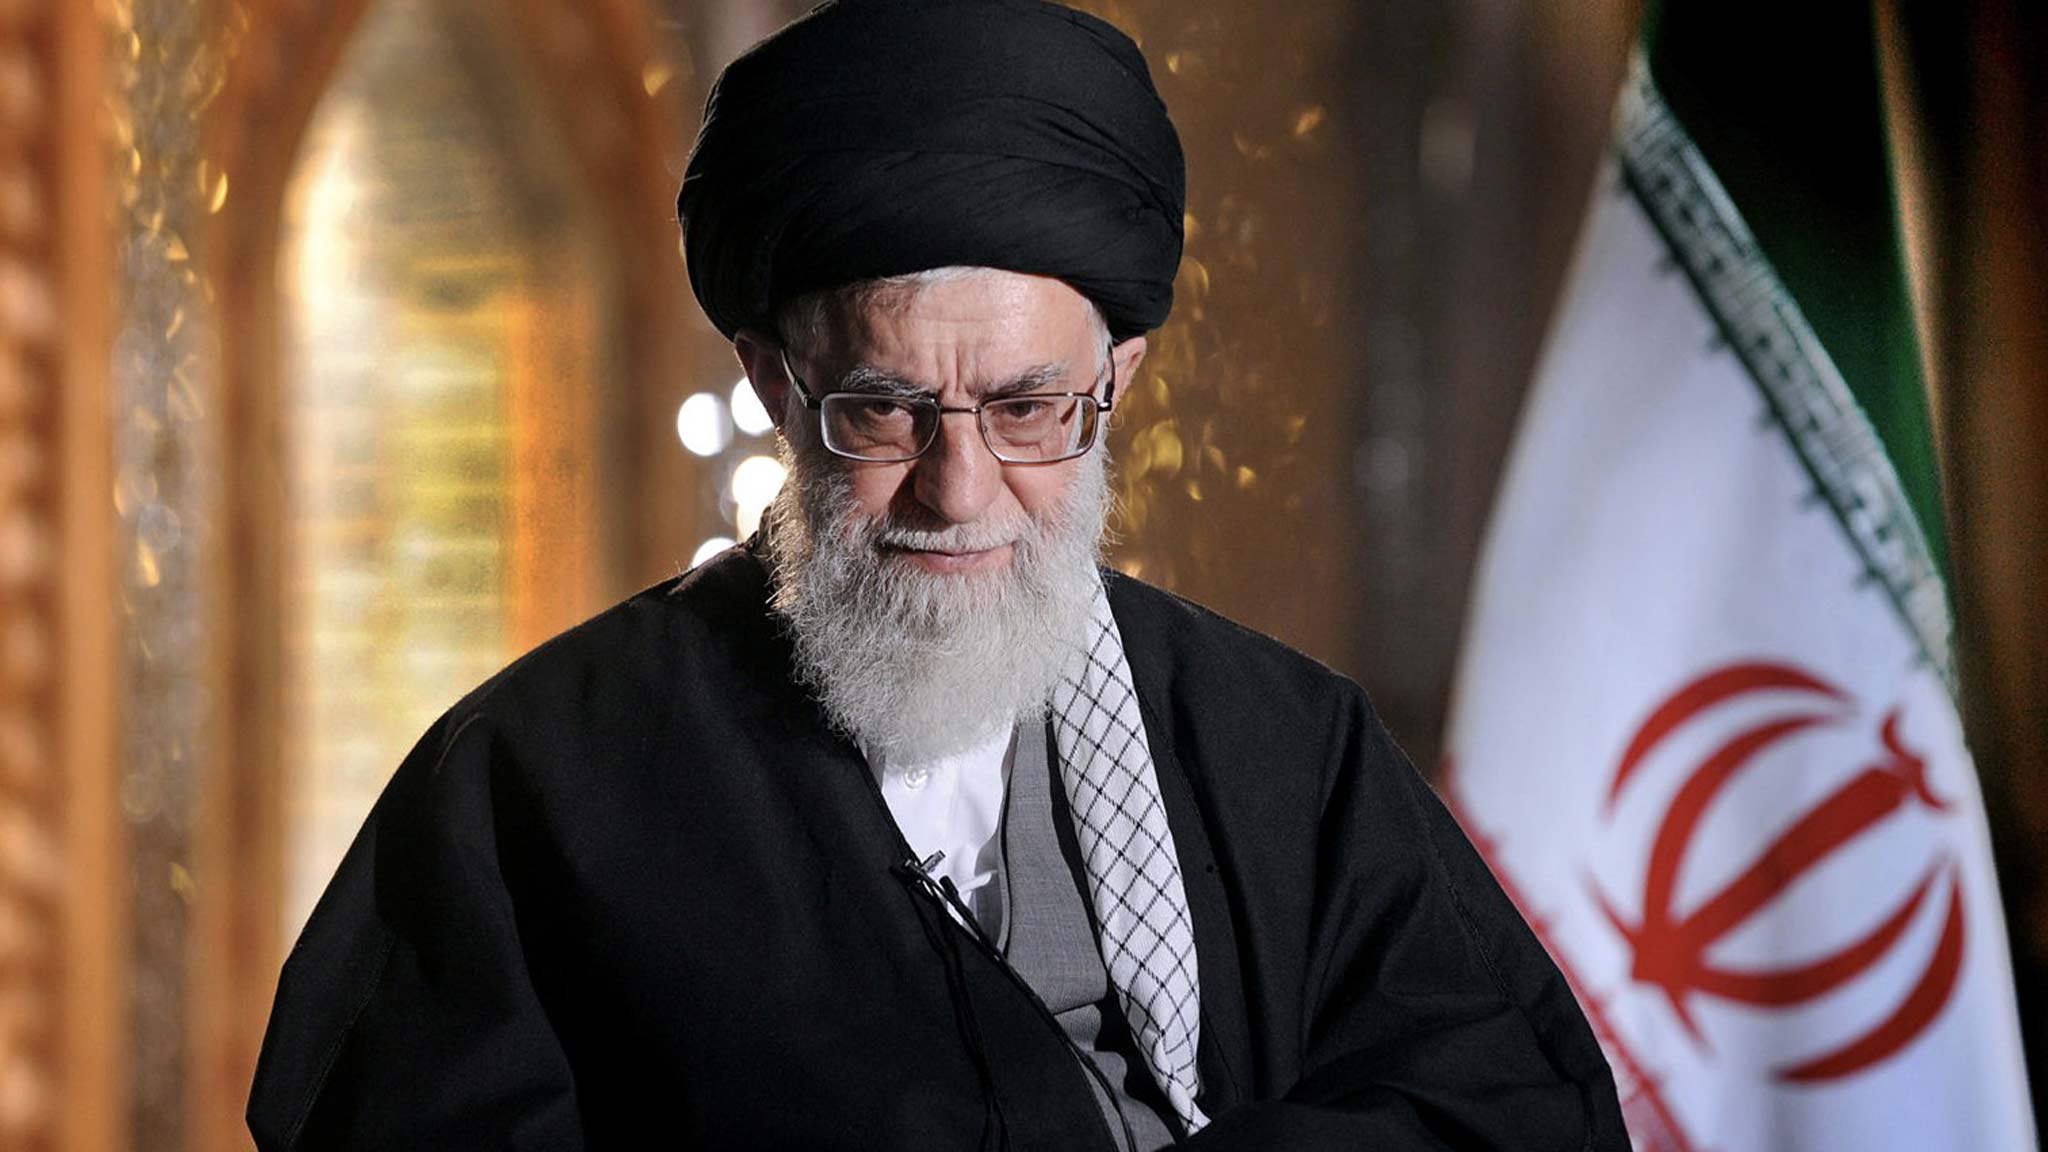 Imam Khamenei 18  Wallpaper Pack by Tinku Puri  Peyman r  Flickr